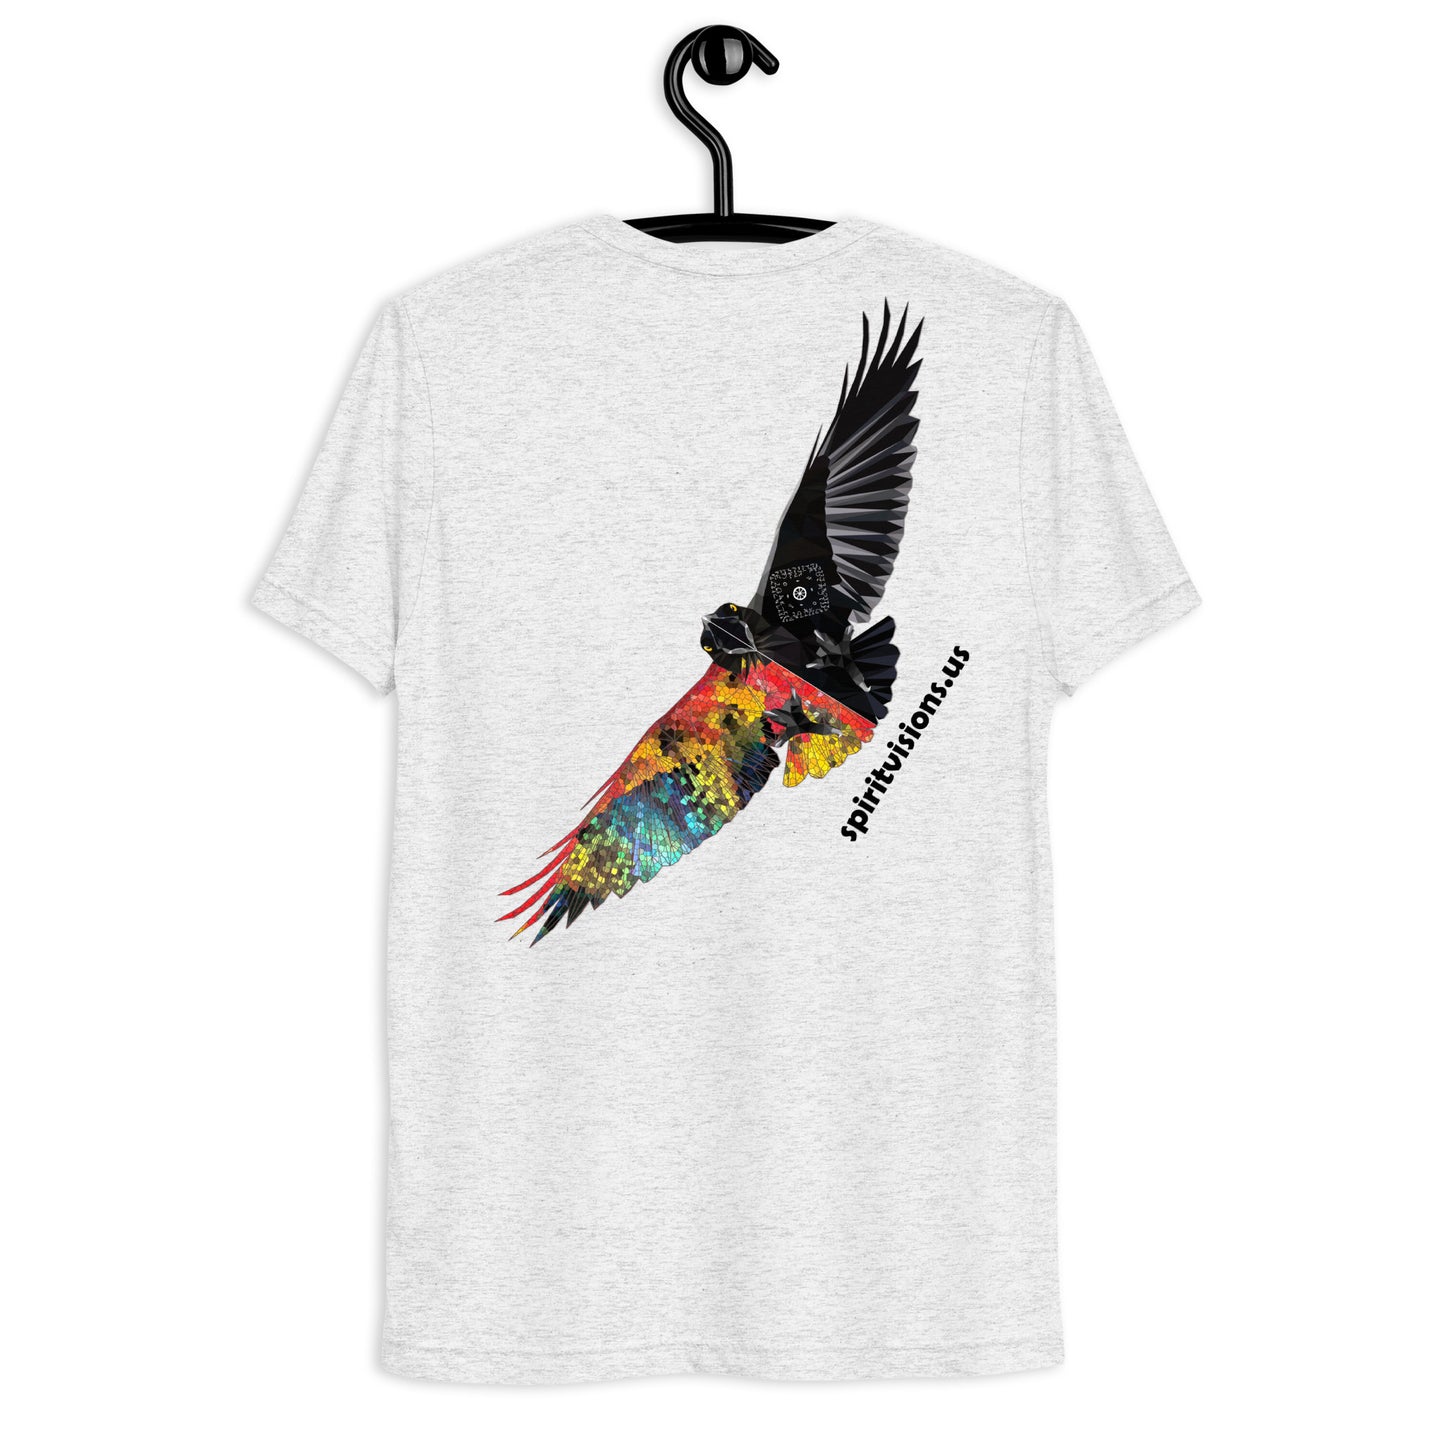 Unisex Short sleeve t-shirt "Big Bird"